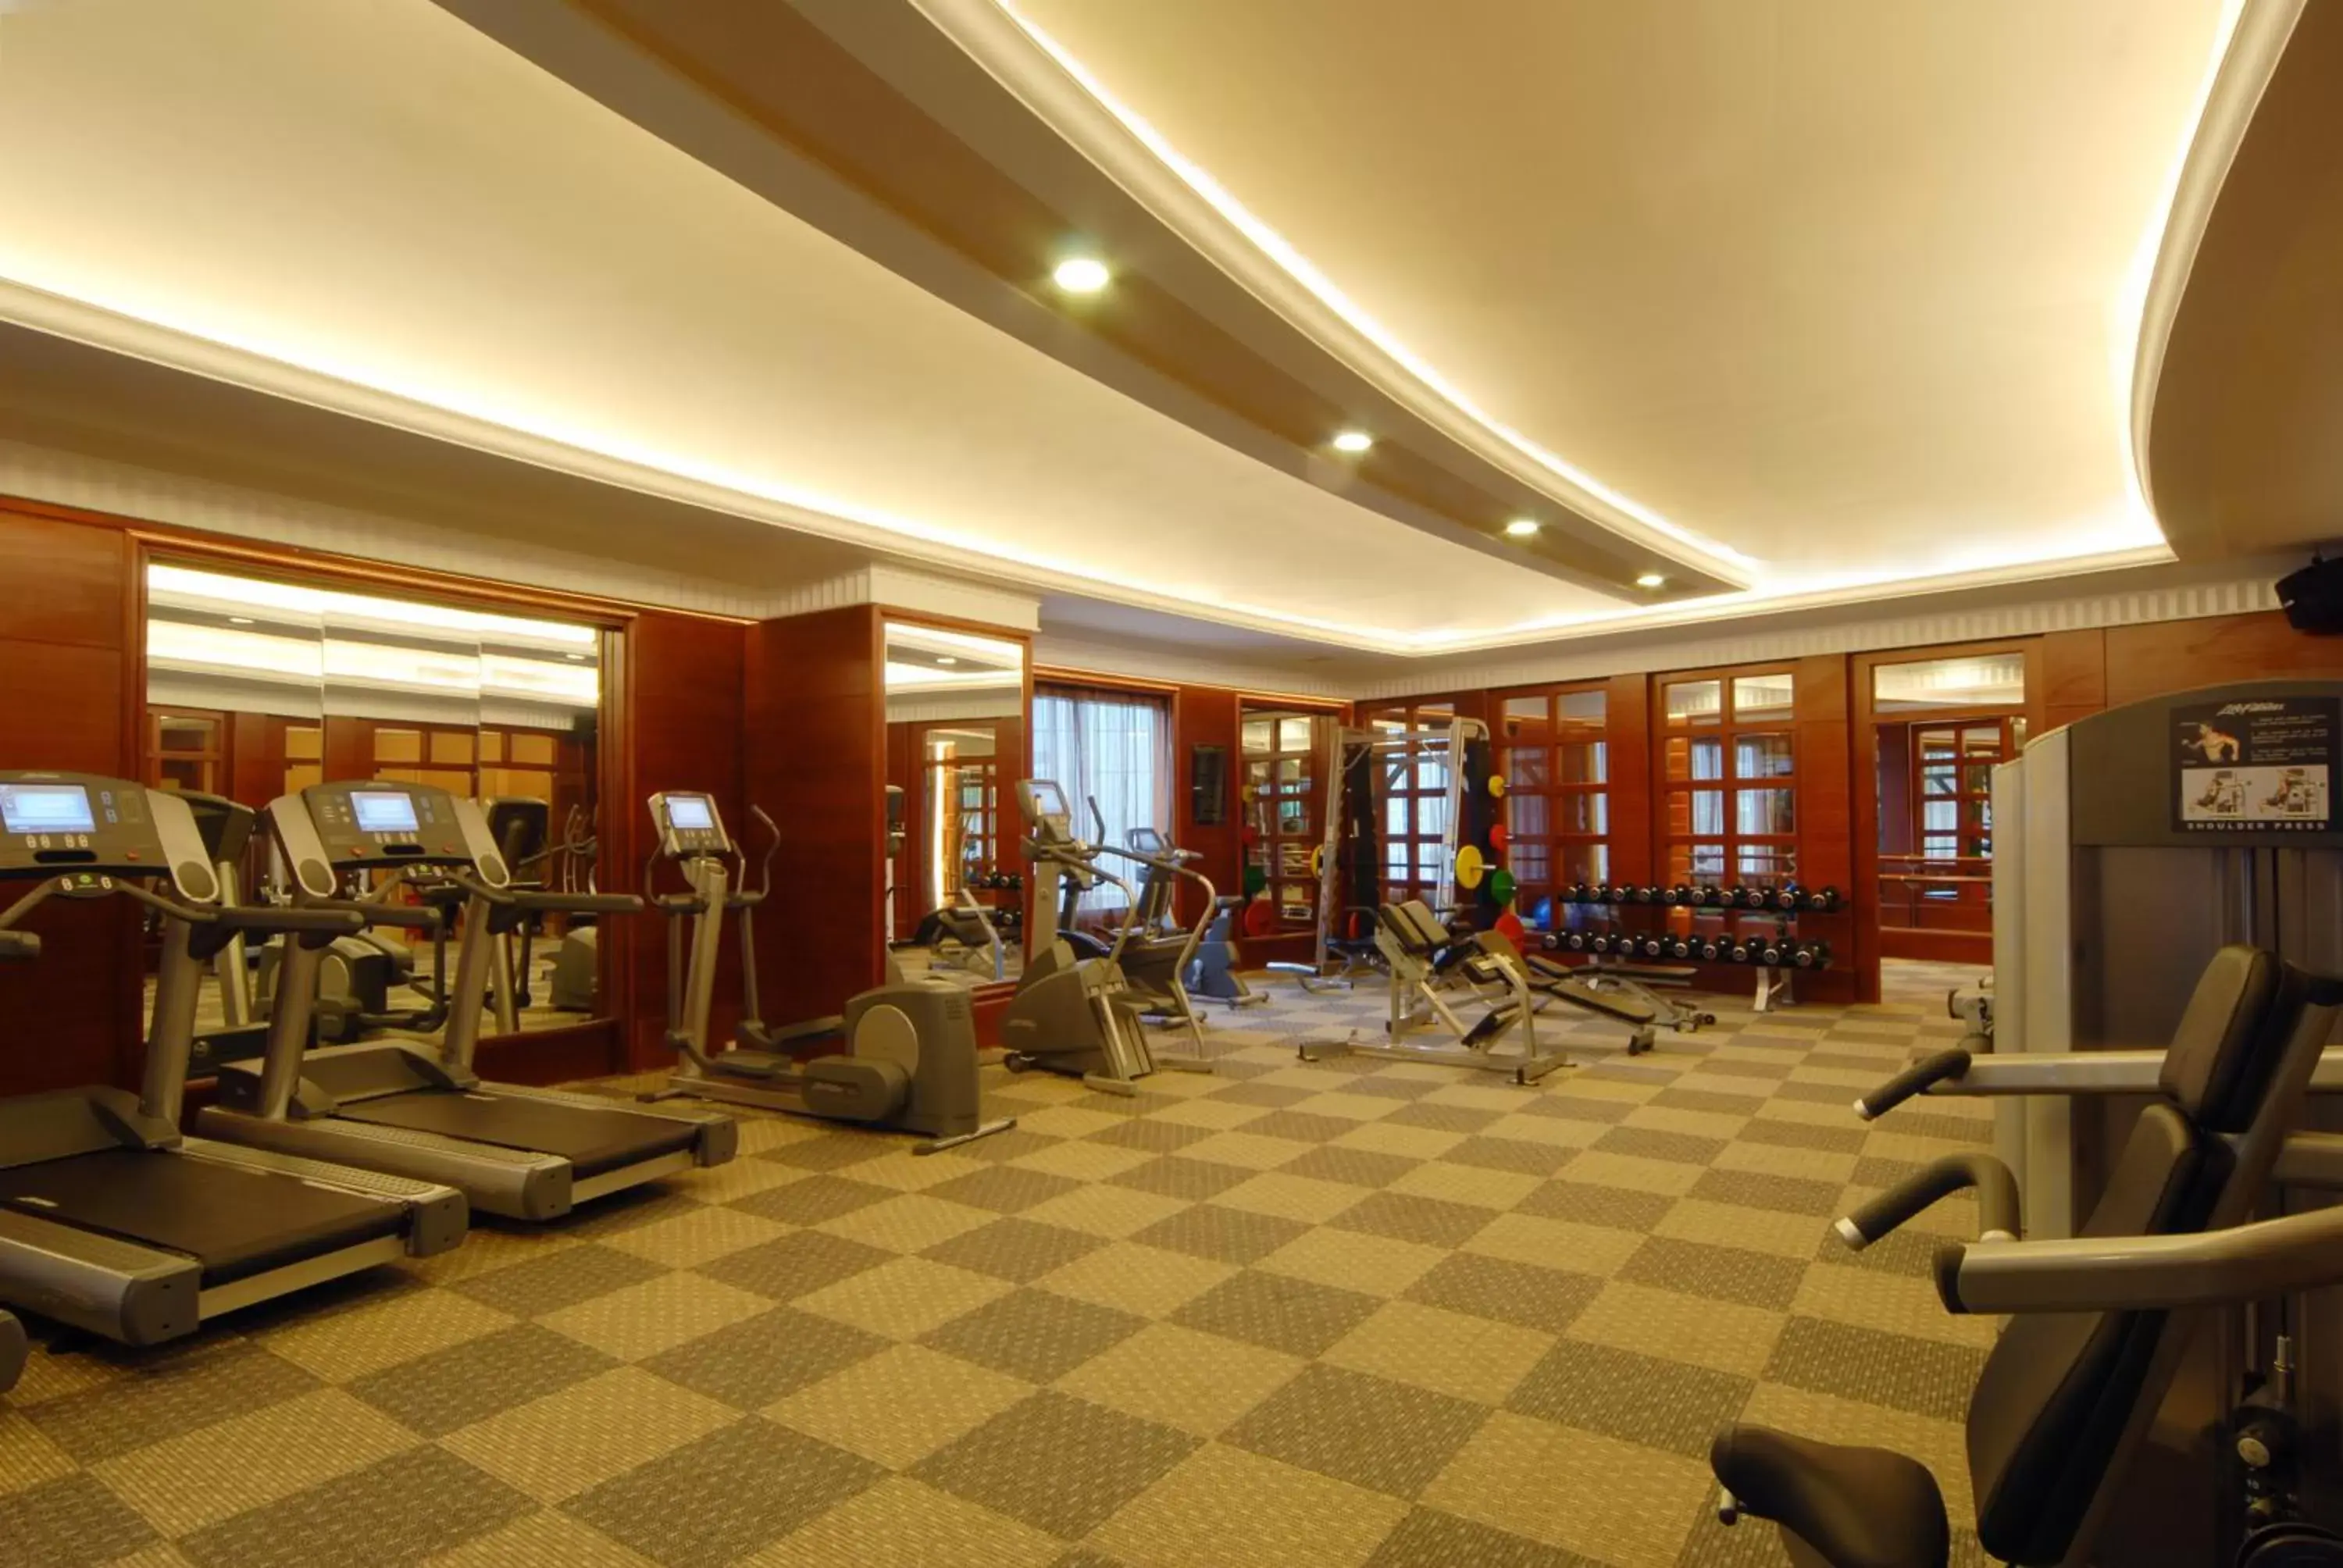 Fitness centre/facilities, Fitness Center/Facilities in Kempinski Hotel Shenzhen